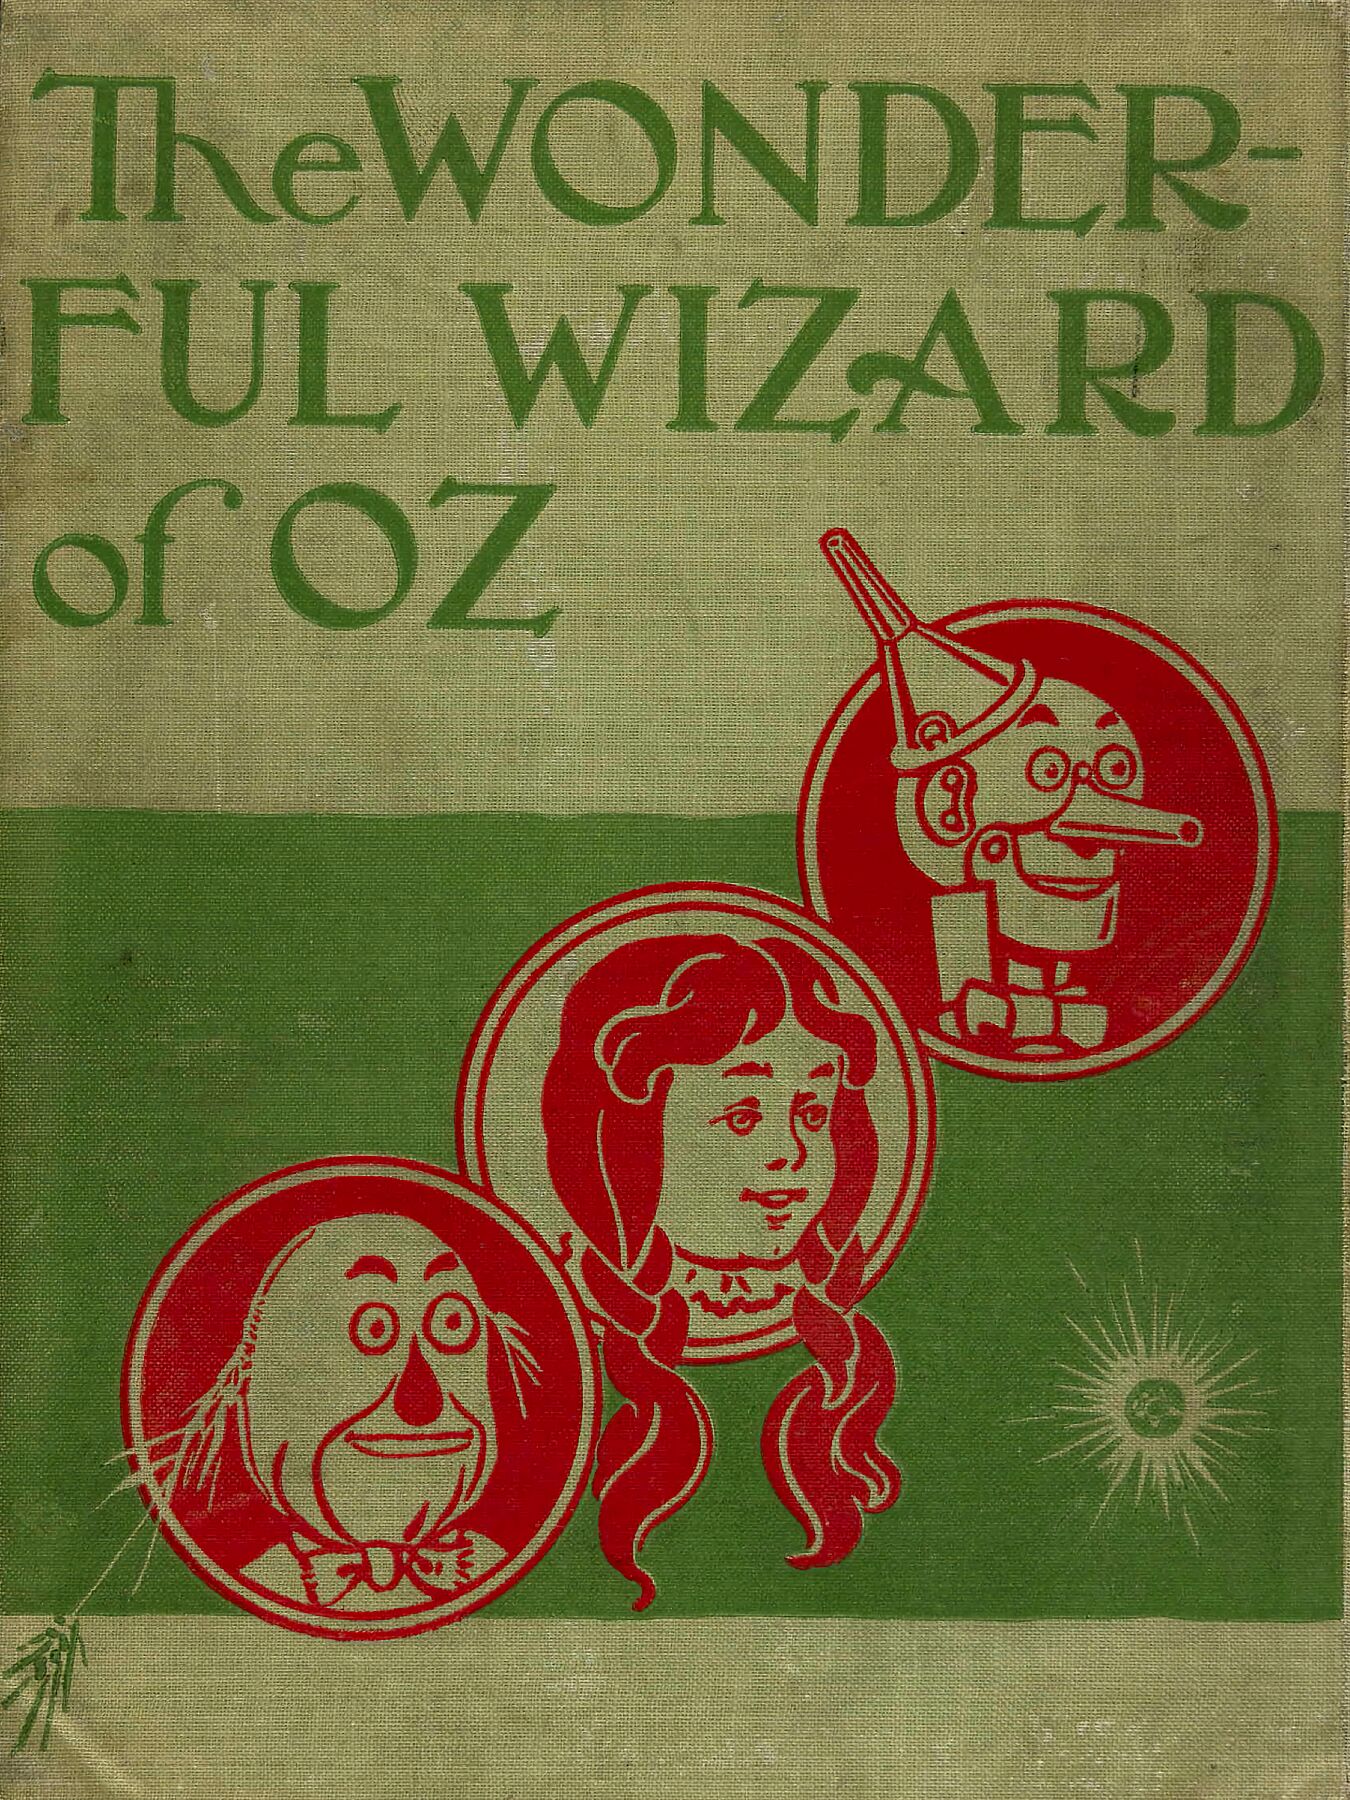 Wizard of Oz Cover by by W. W. Denslow - 1900